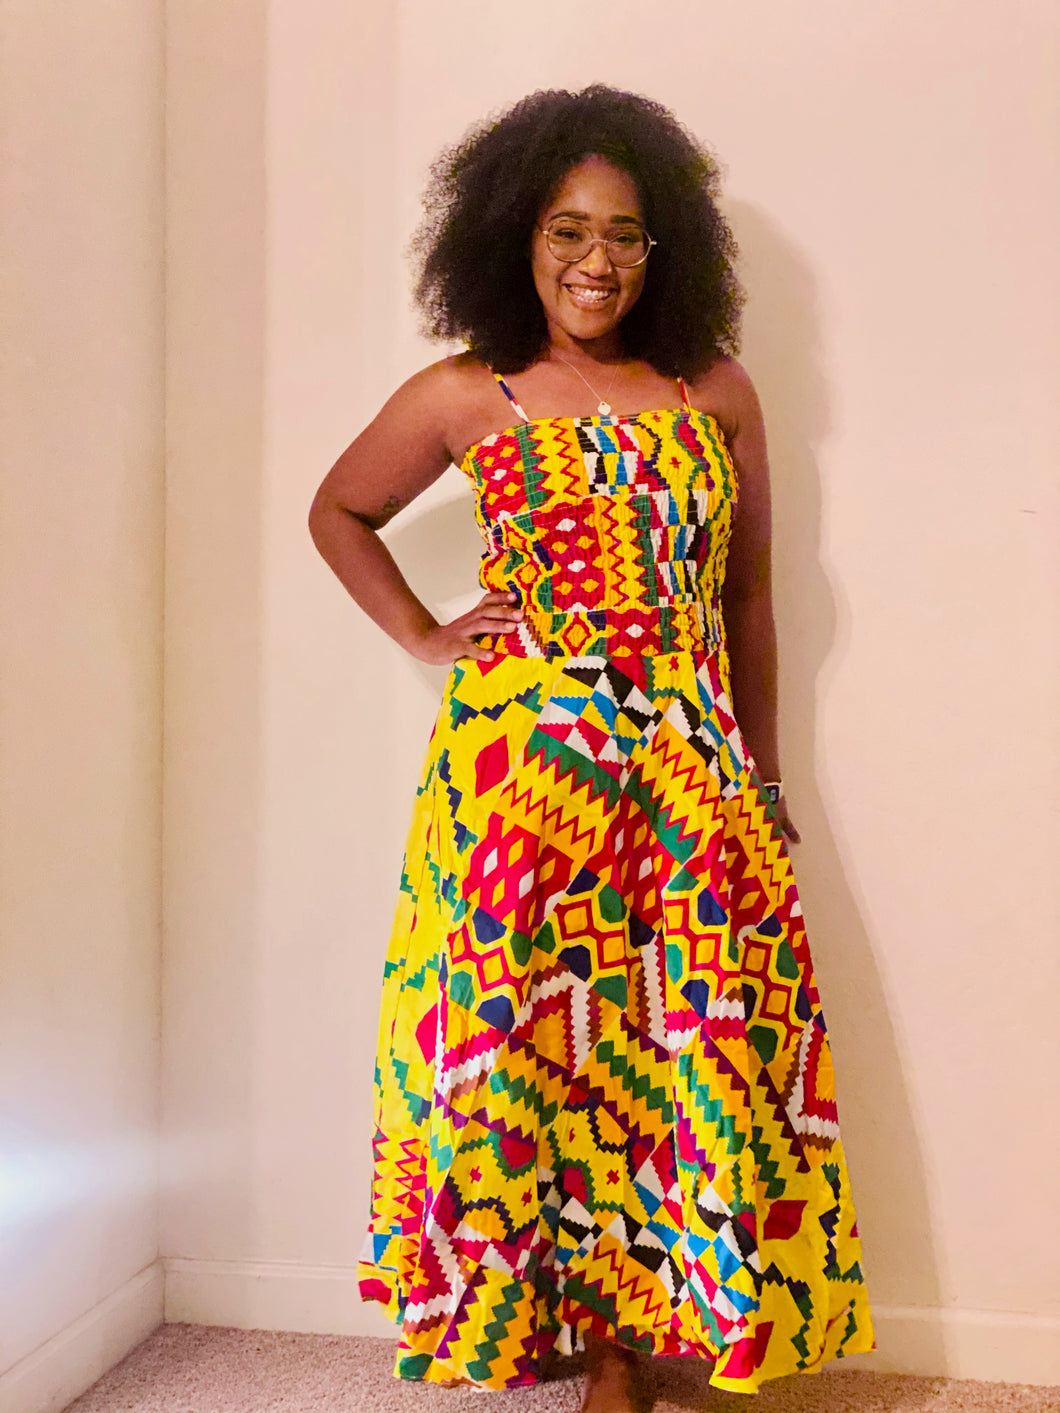 African Print Tube Top Dresses